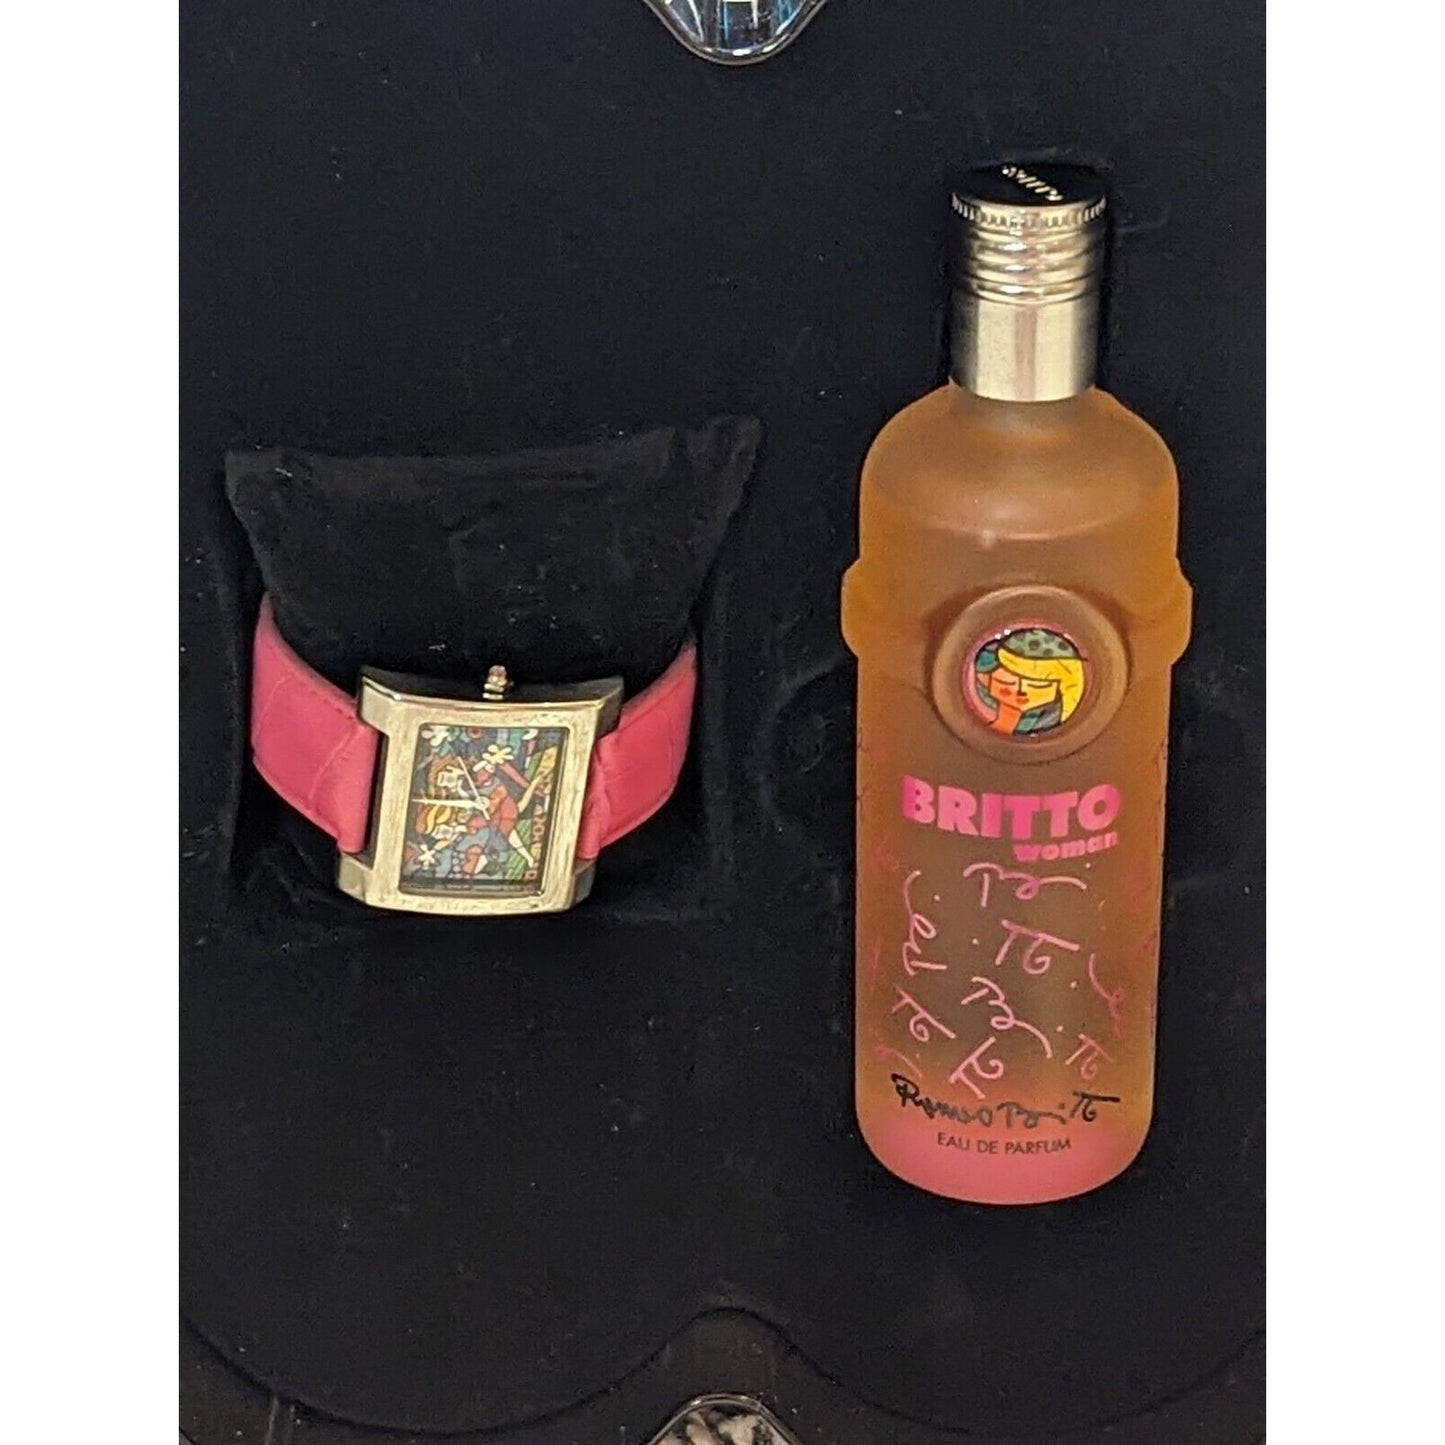 Romero Britto Watch & Eau De Parfum Perfume Gift Set in Metal Flower Tin